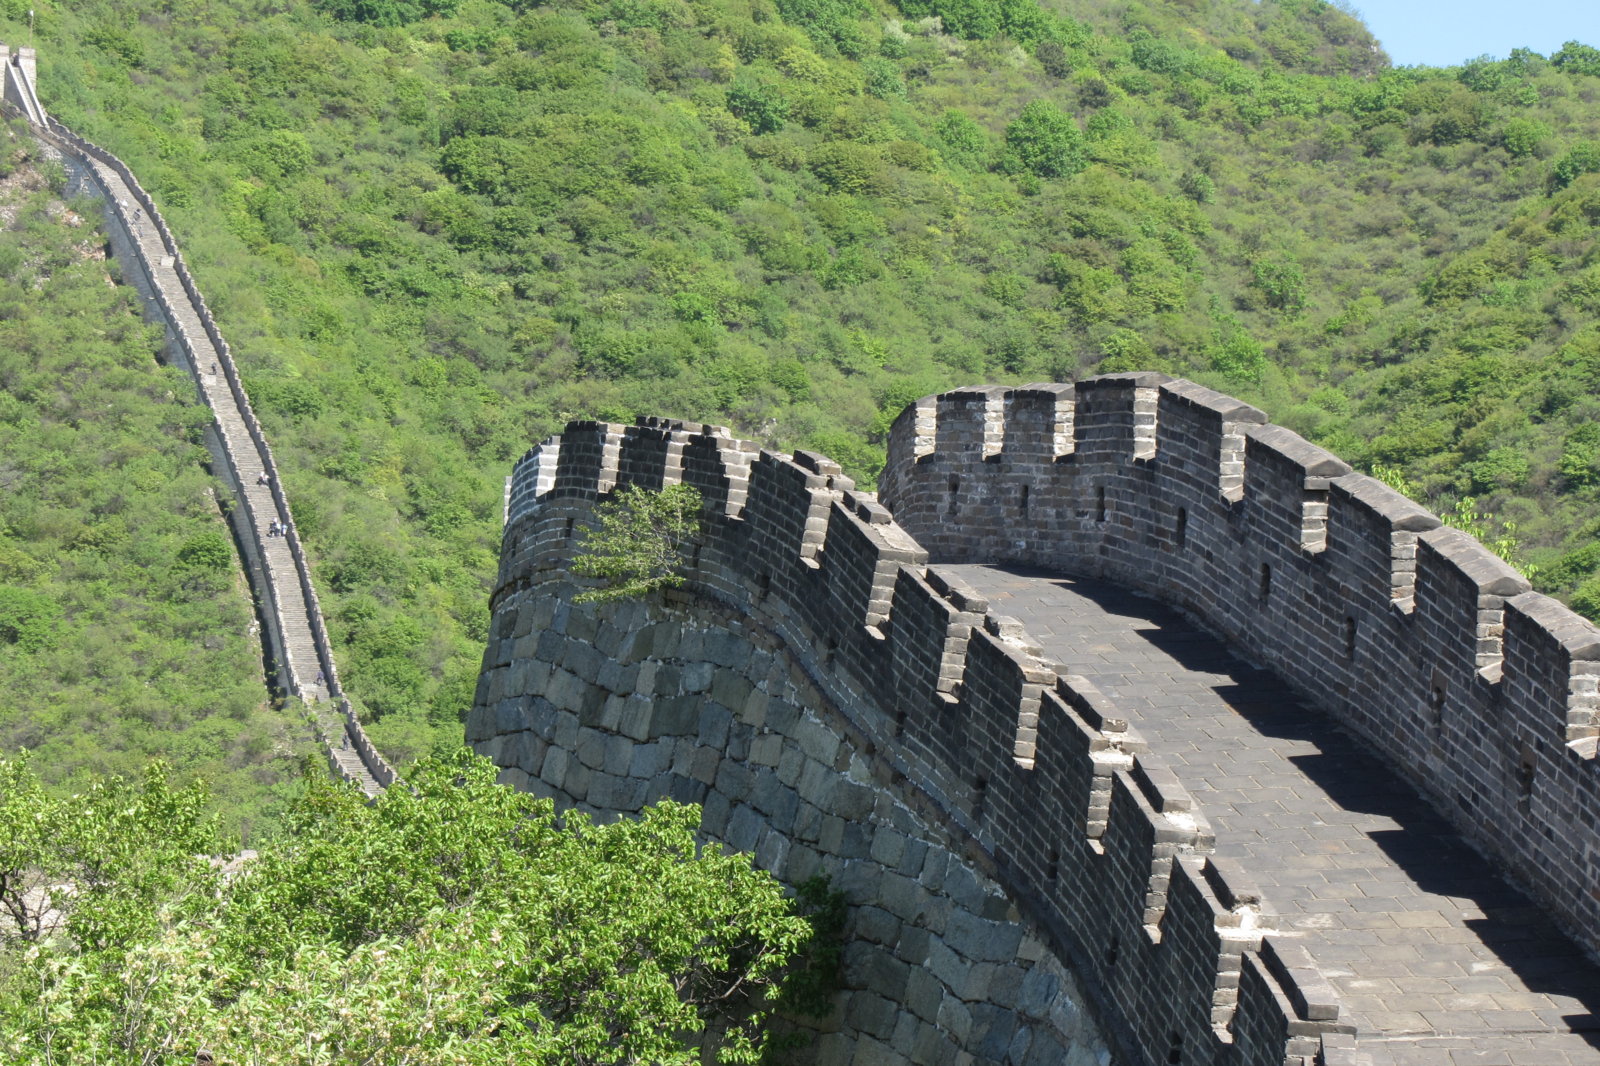 Great Wall - Mutianyu sector